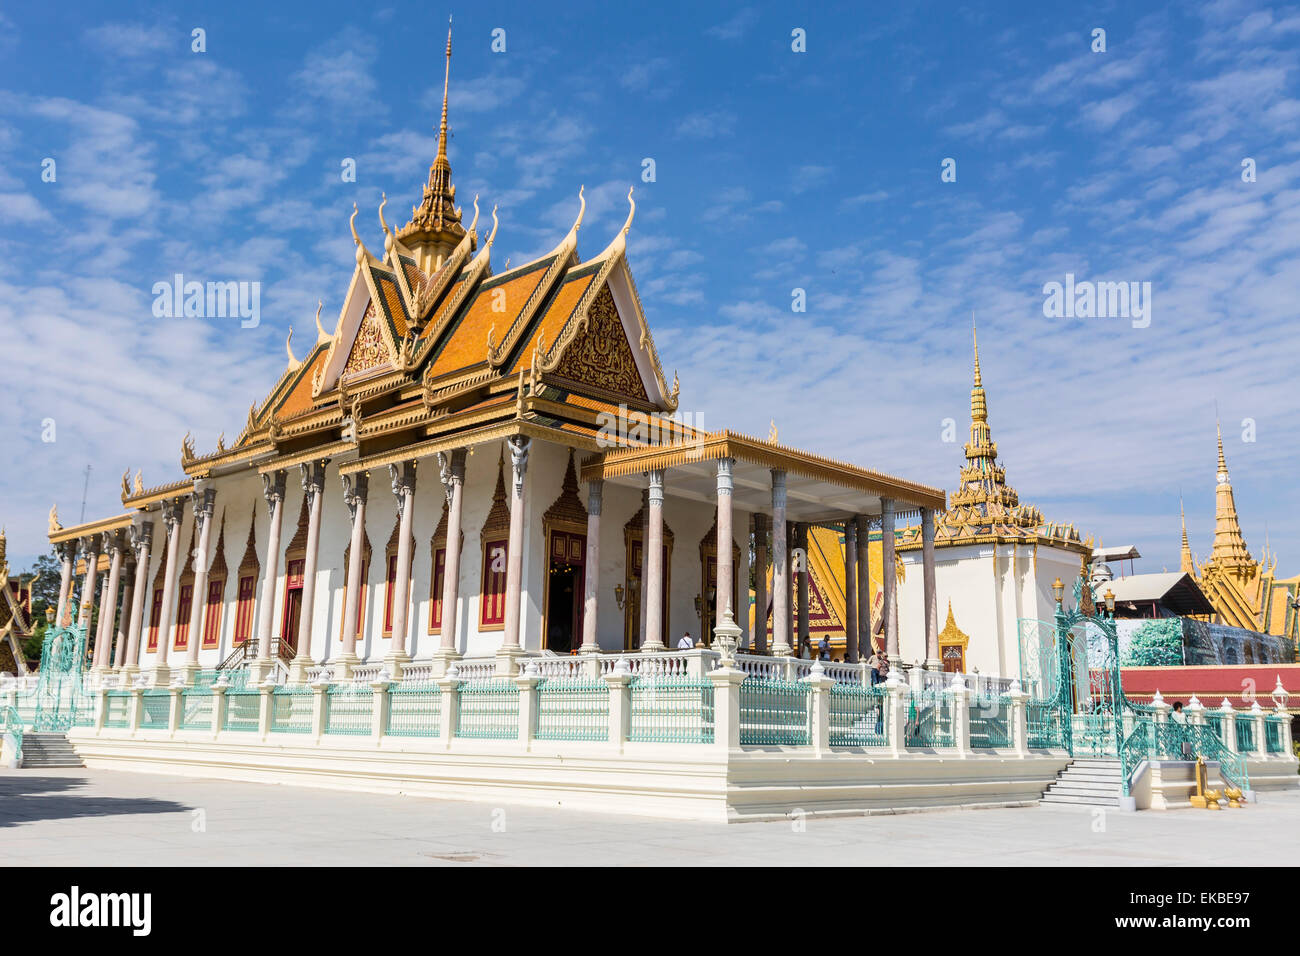 La Pagoda d'argento (Wat Preah Keo) nella capitale Phnom Penh, Cambogia, Indocina, Asia sud-orientale, Asia Foto Stock